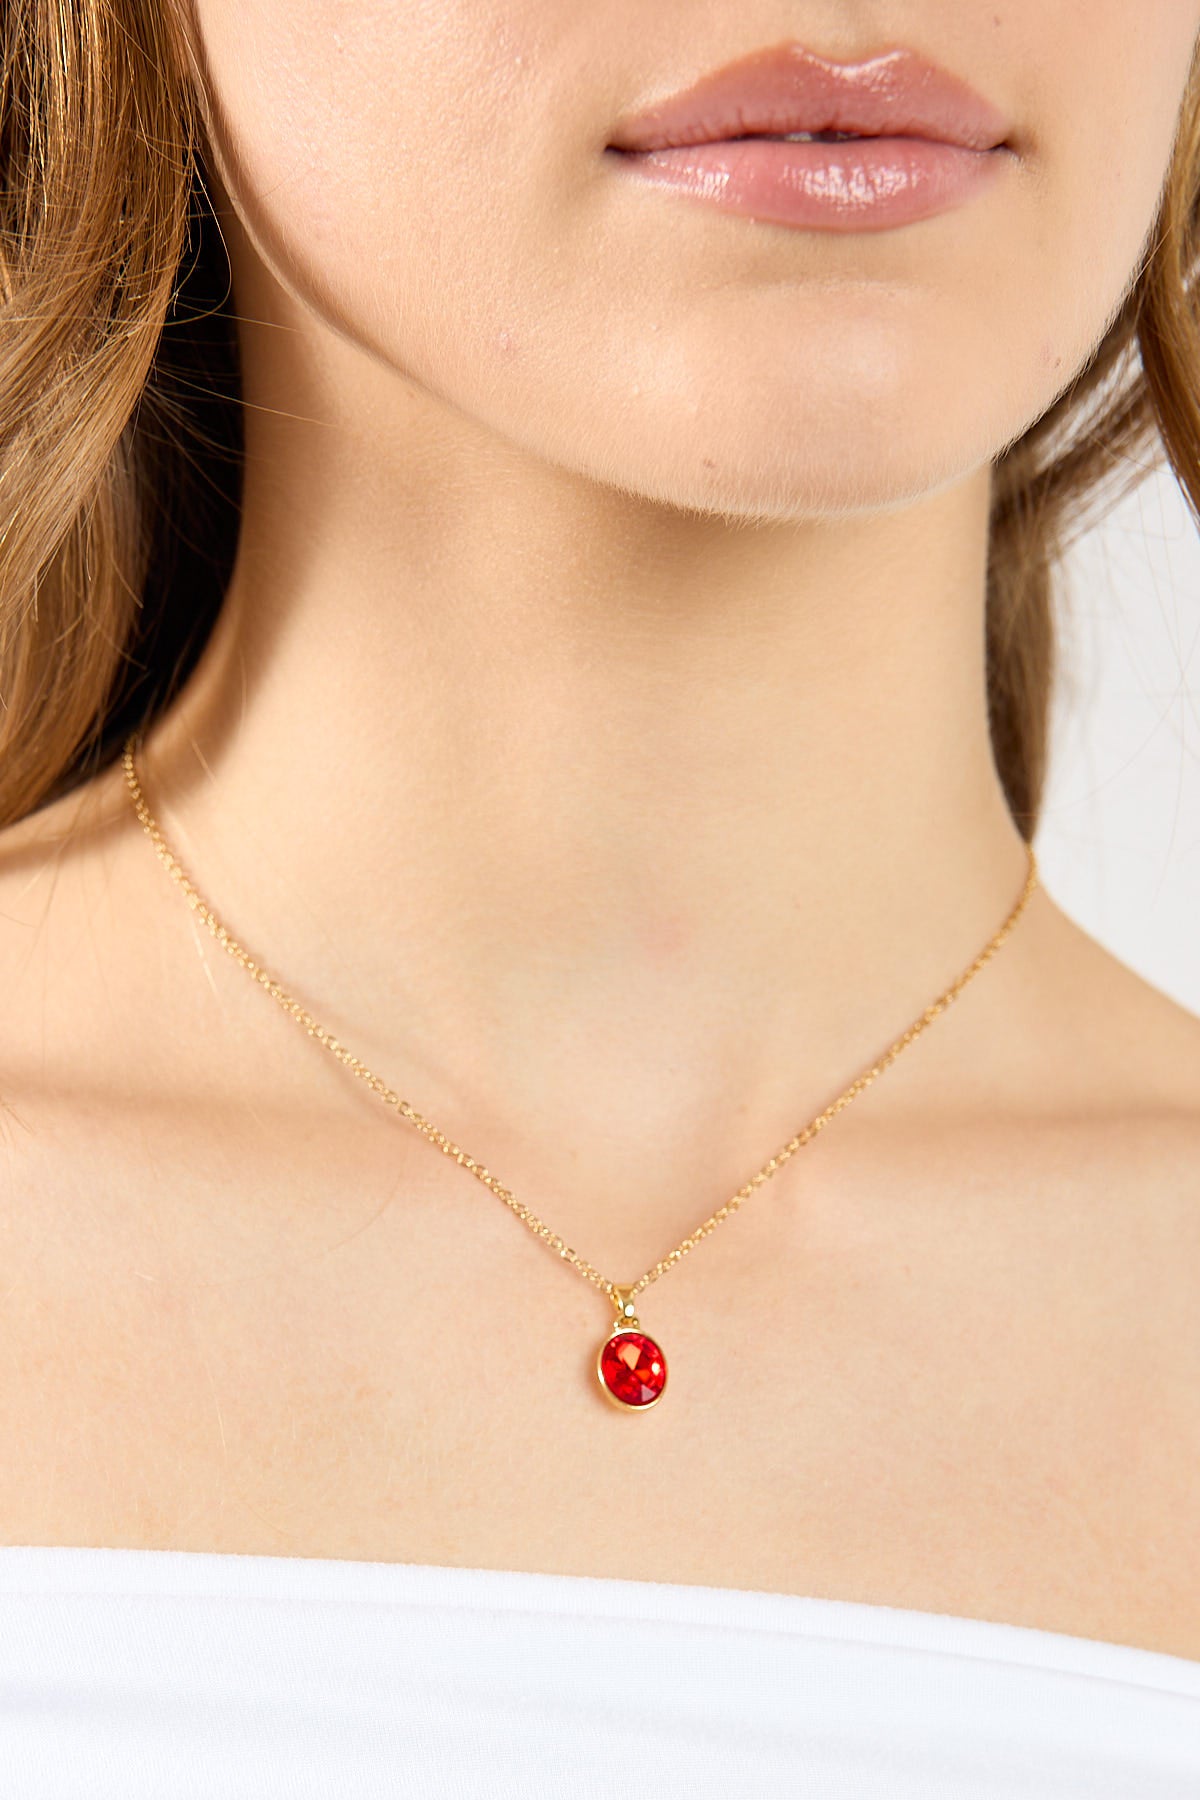 Perfect Stranger Romance Pendant Necklace Gold